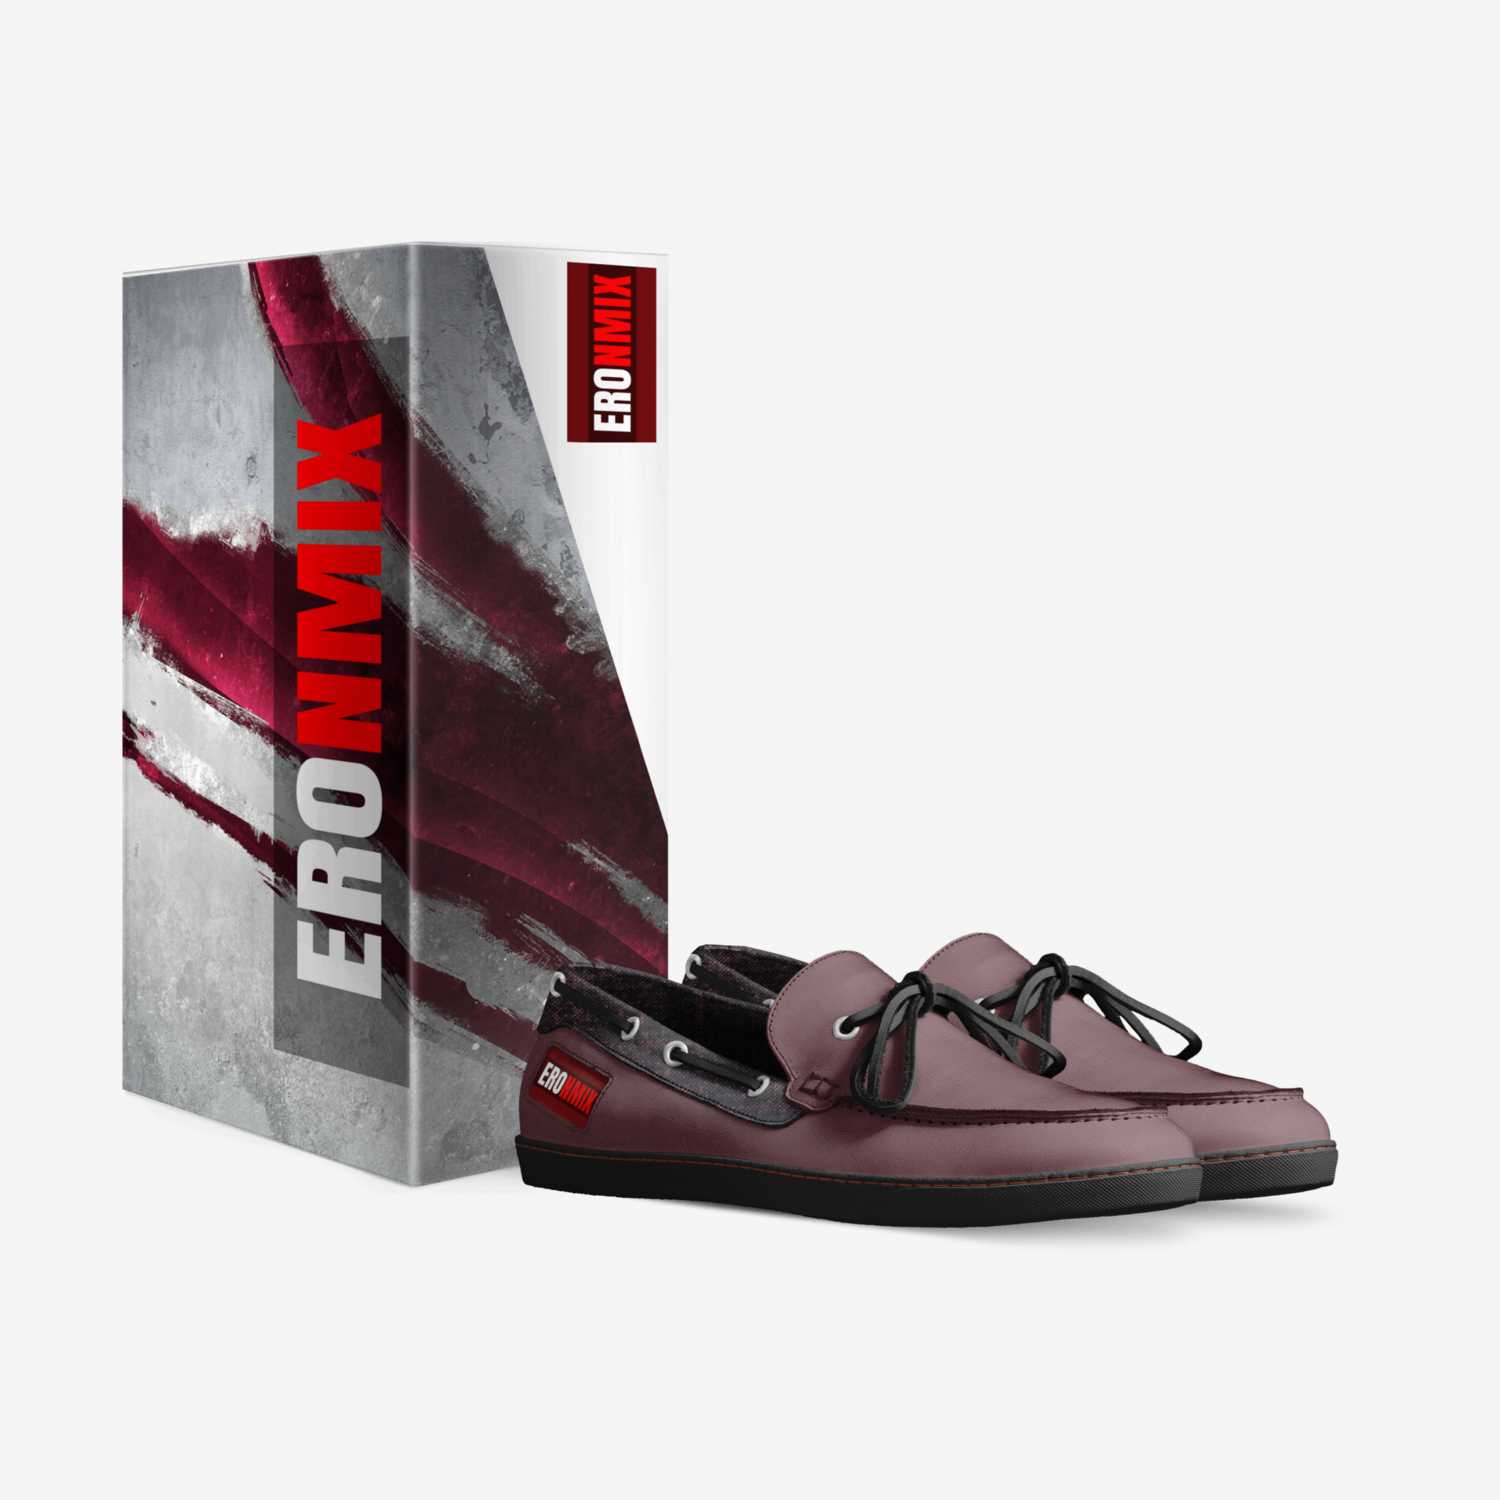 Eronmix Passions custom made in Italy shoes by Eduardo Ramirez | Box view